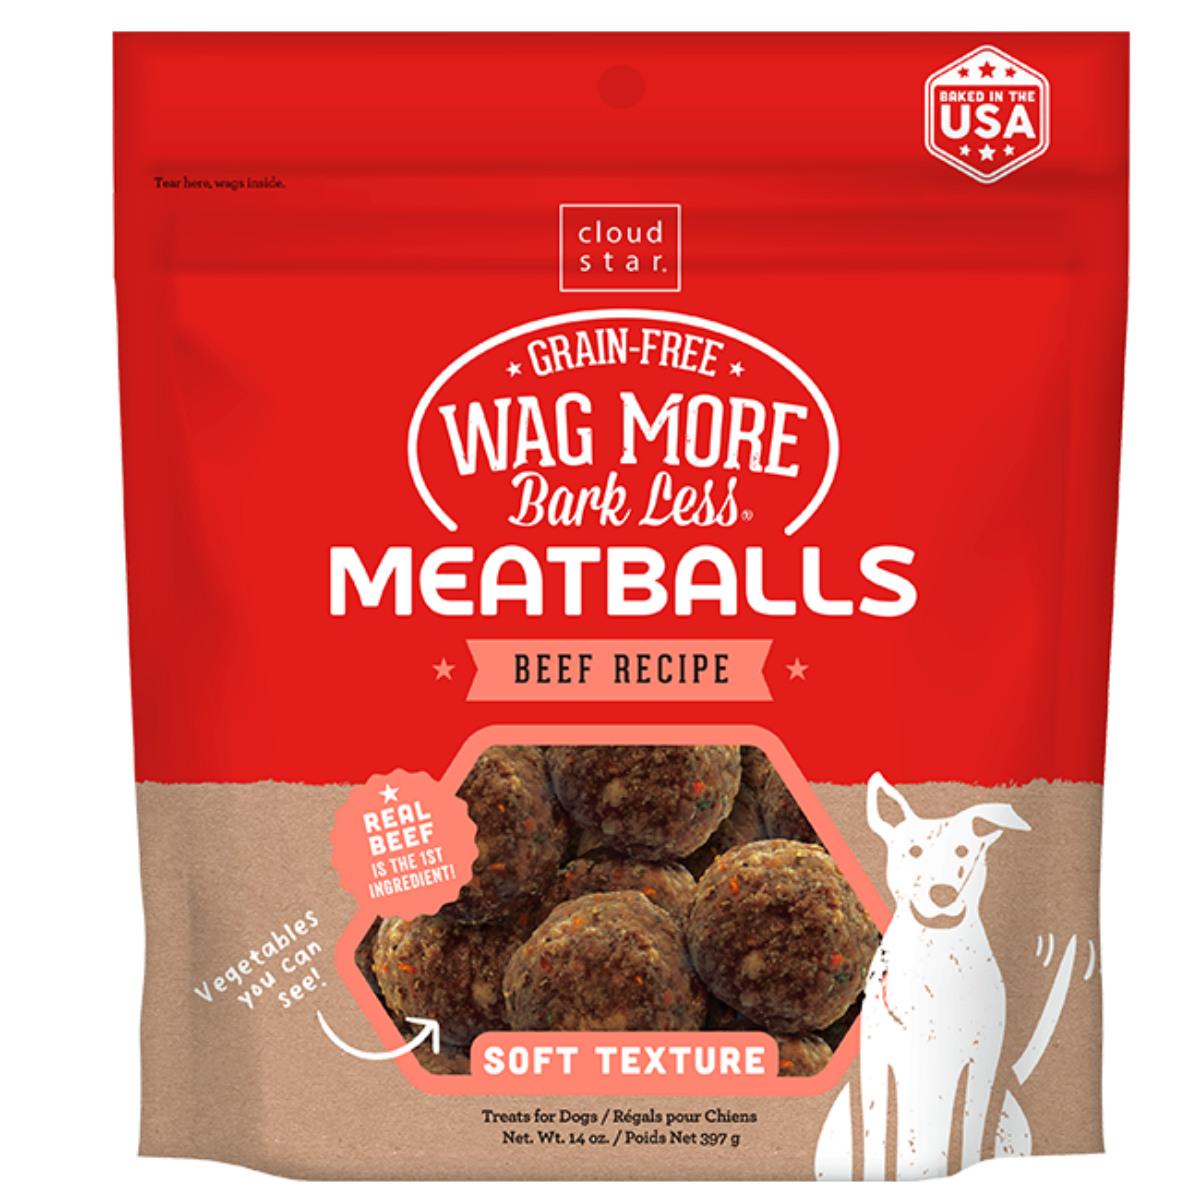 Cloud Star Wag More Bark Less Grain Free Meatballs - Beef Recipe